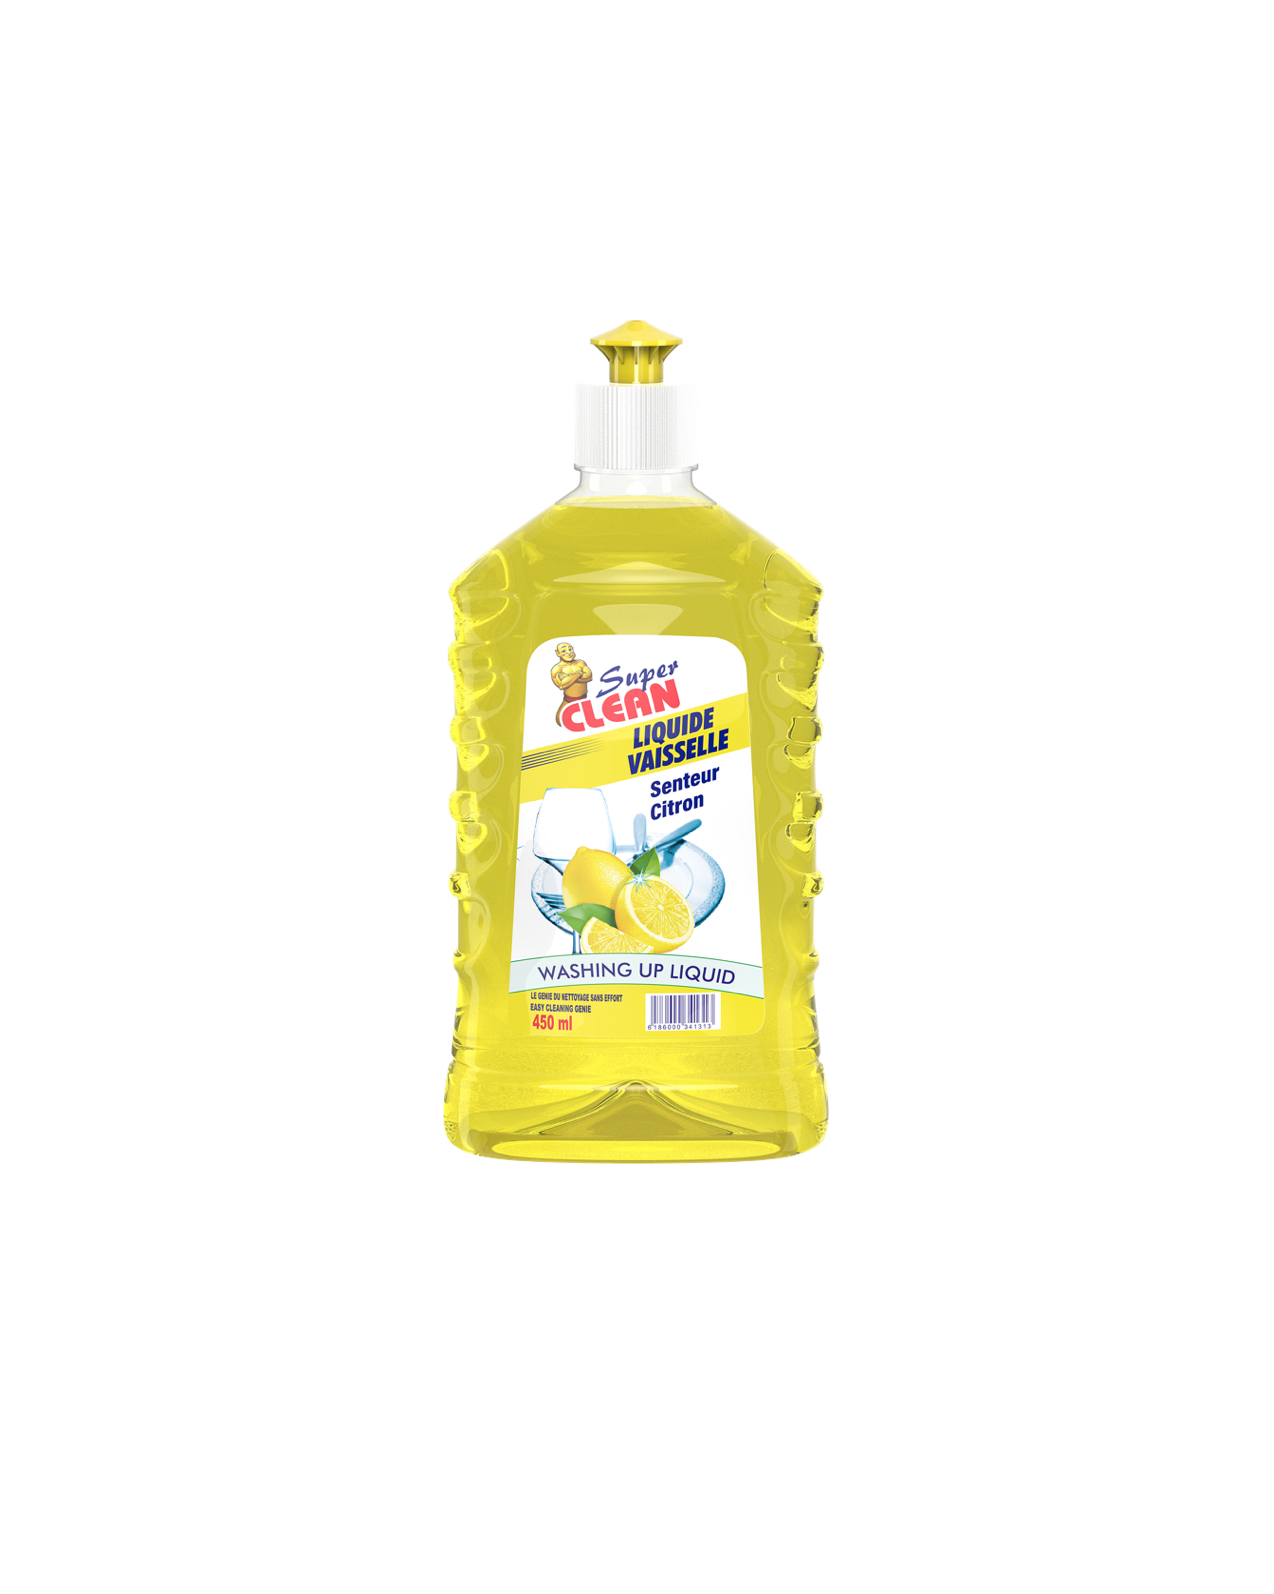 SUPER CLEAN_Liquide Vaisselle Citron 450ml_siprochim